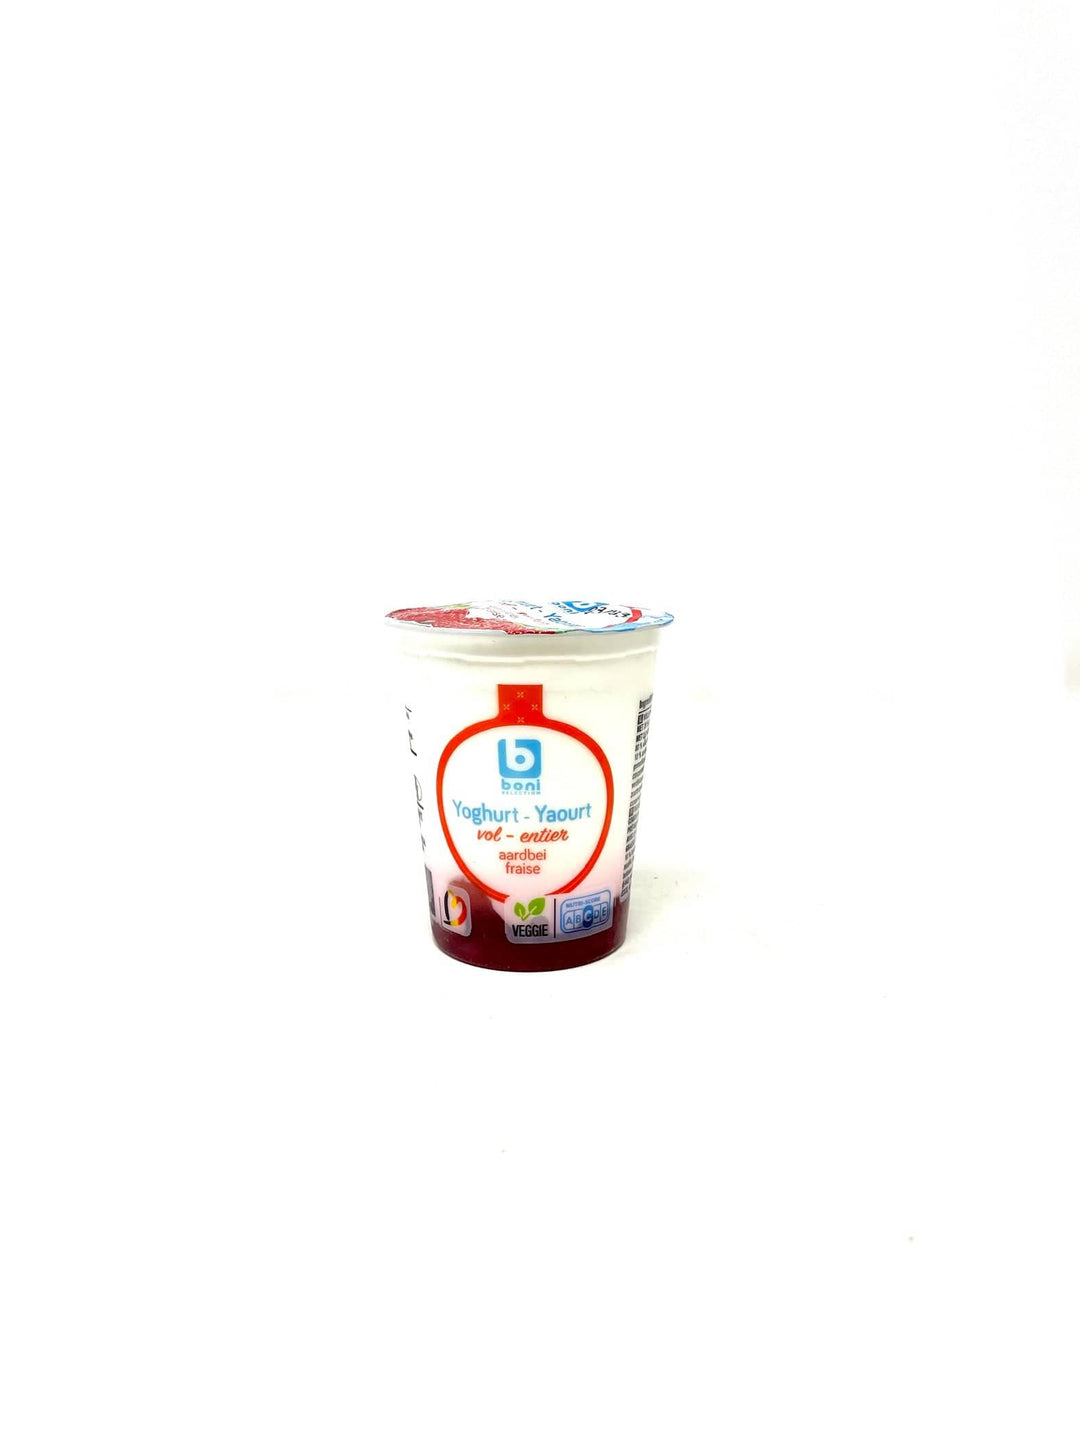 Boni Yoghurt Strawberry 200g